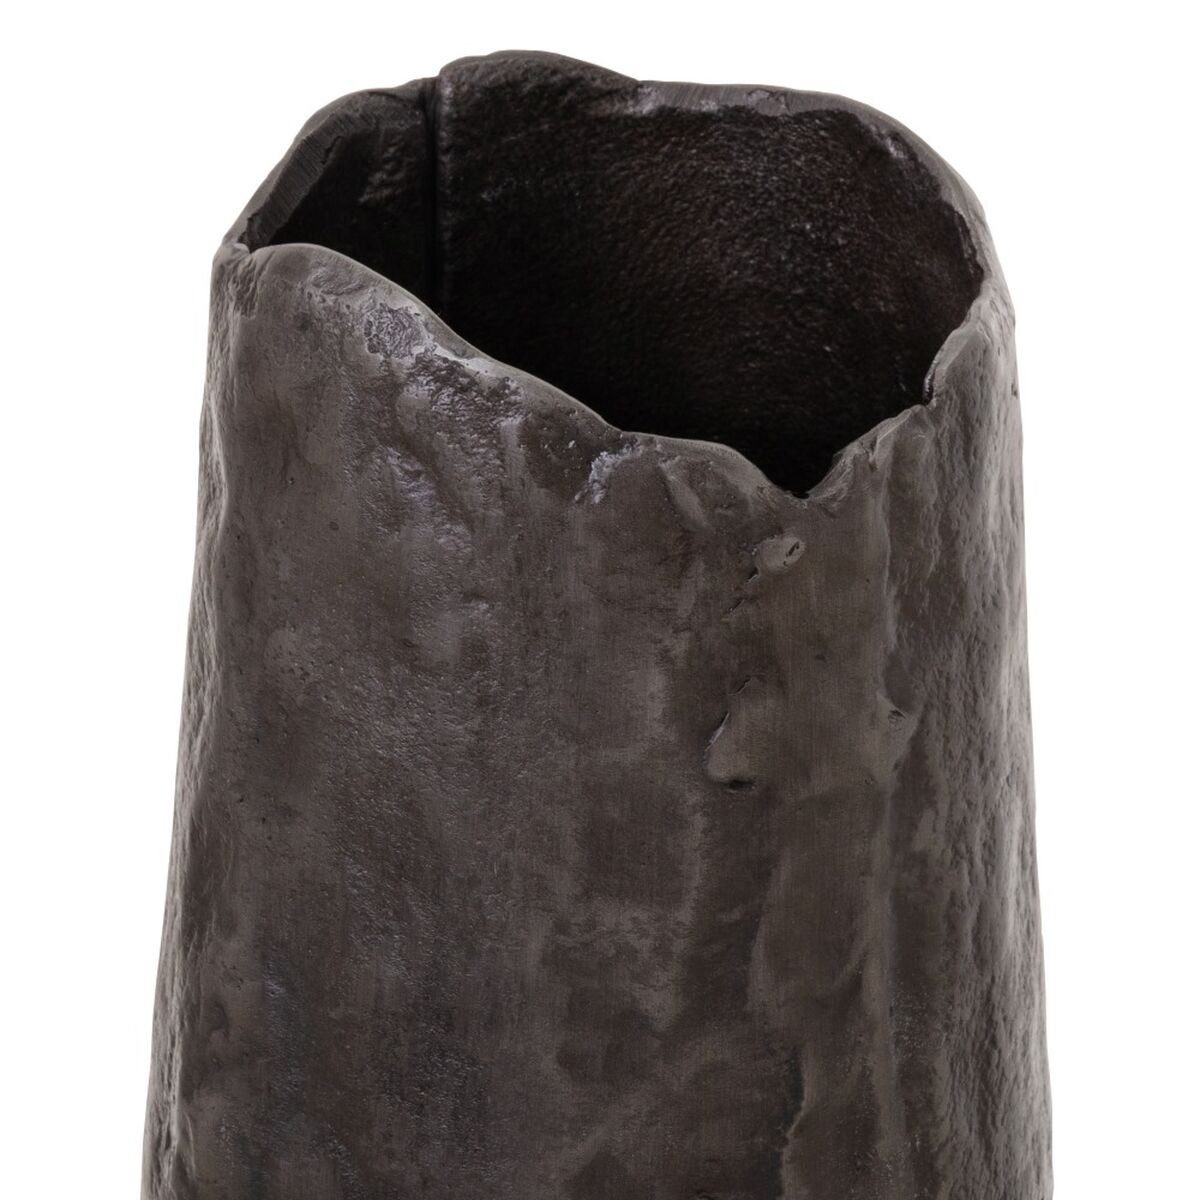 x x 26 14 cm Dekovase Aluminium Vase Bigbuy 14 Grau